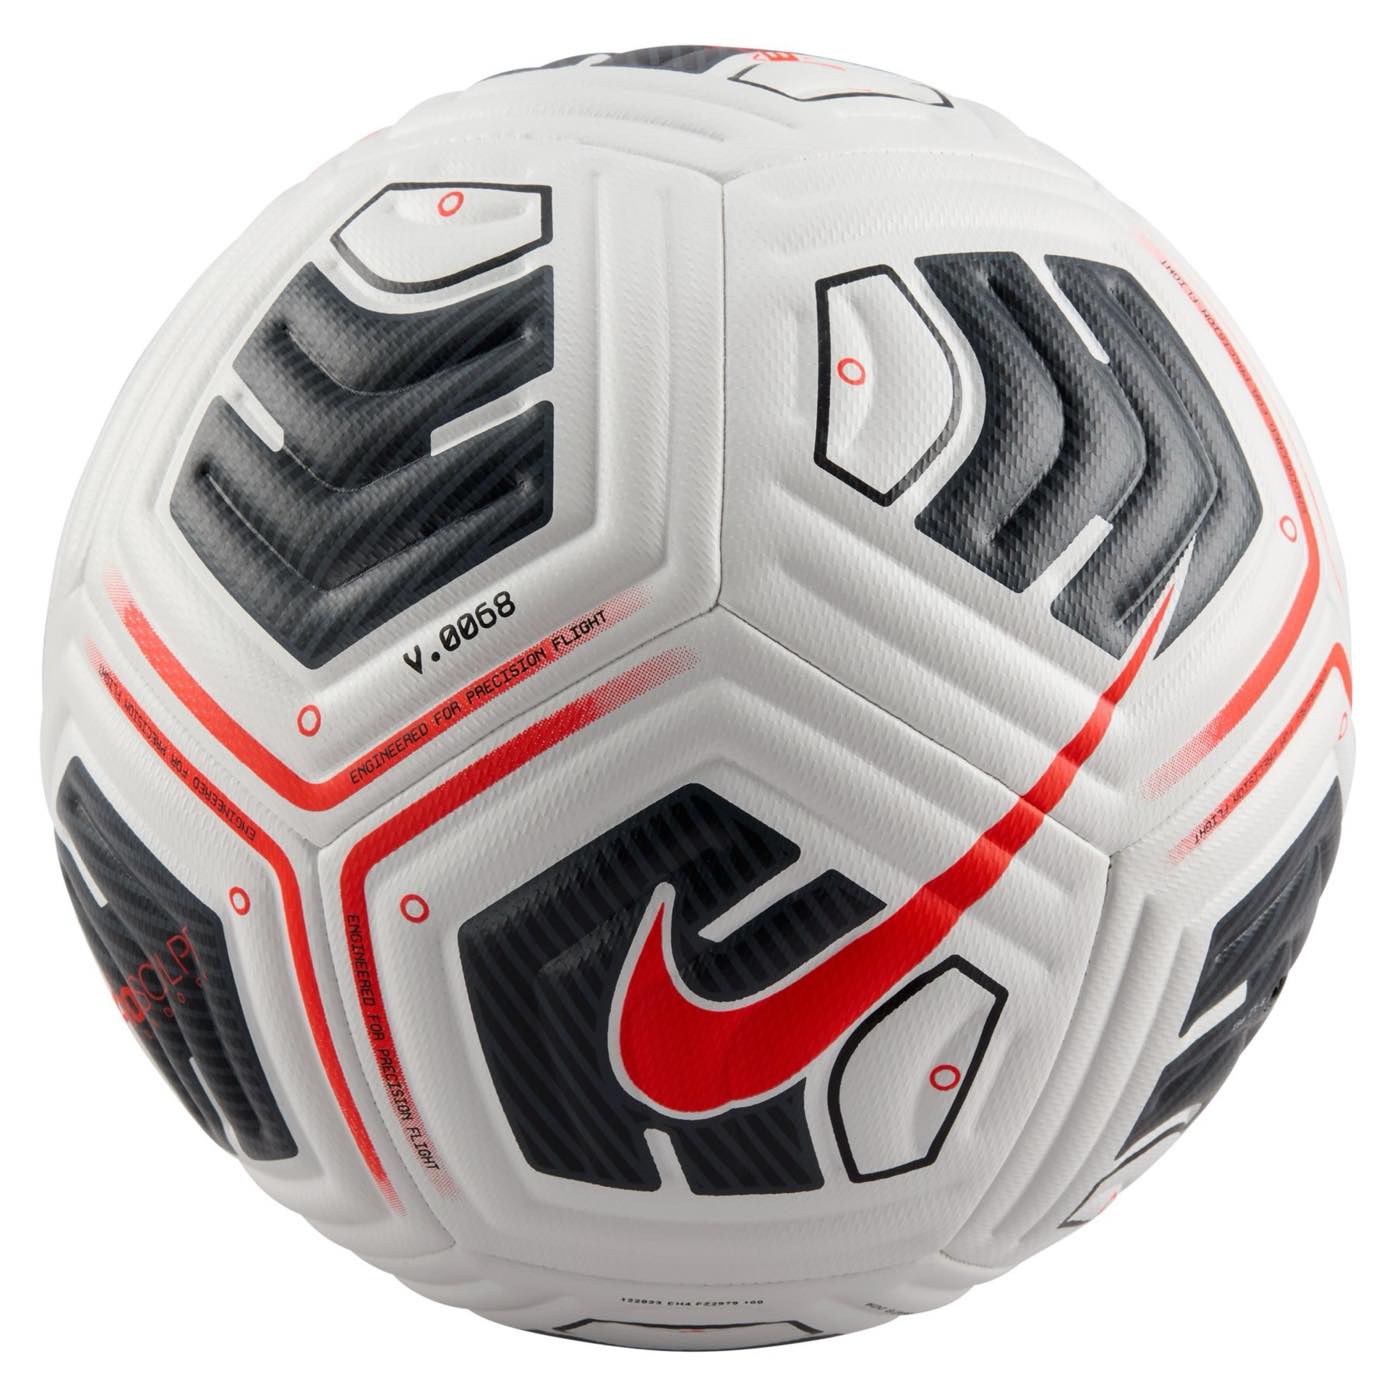 Nike Academy Plus Soccer Ball with Aerowsculpt Technology